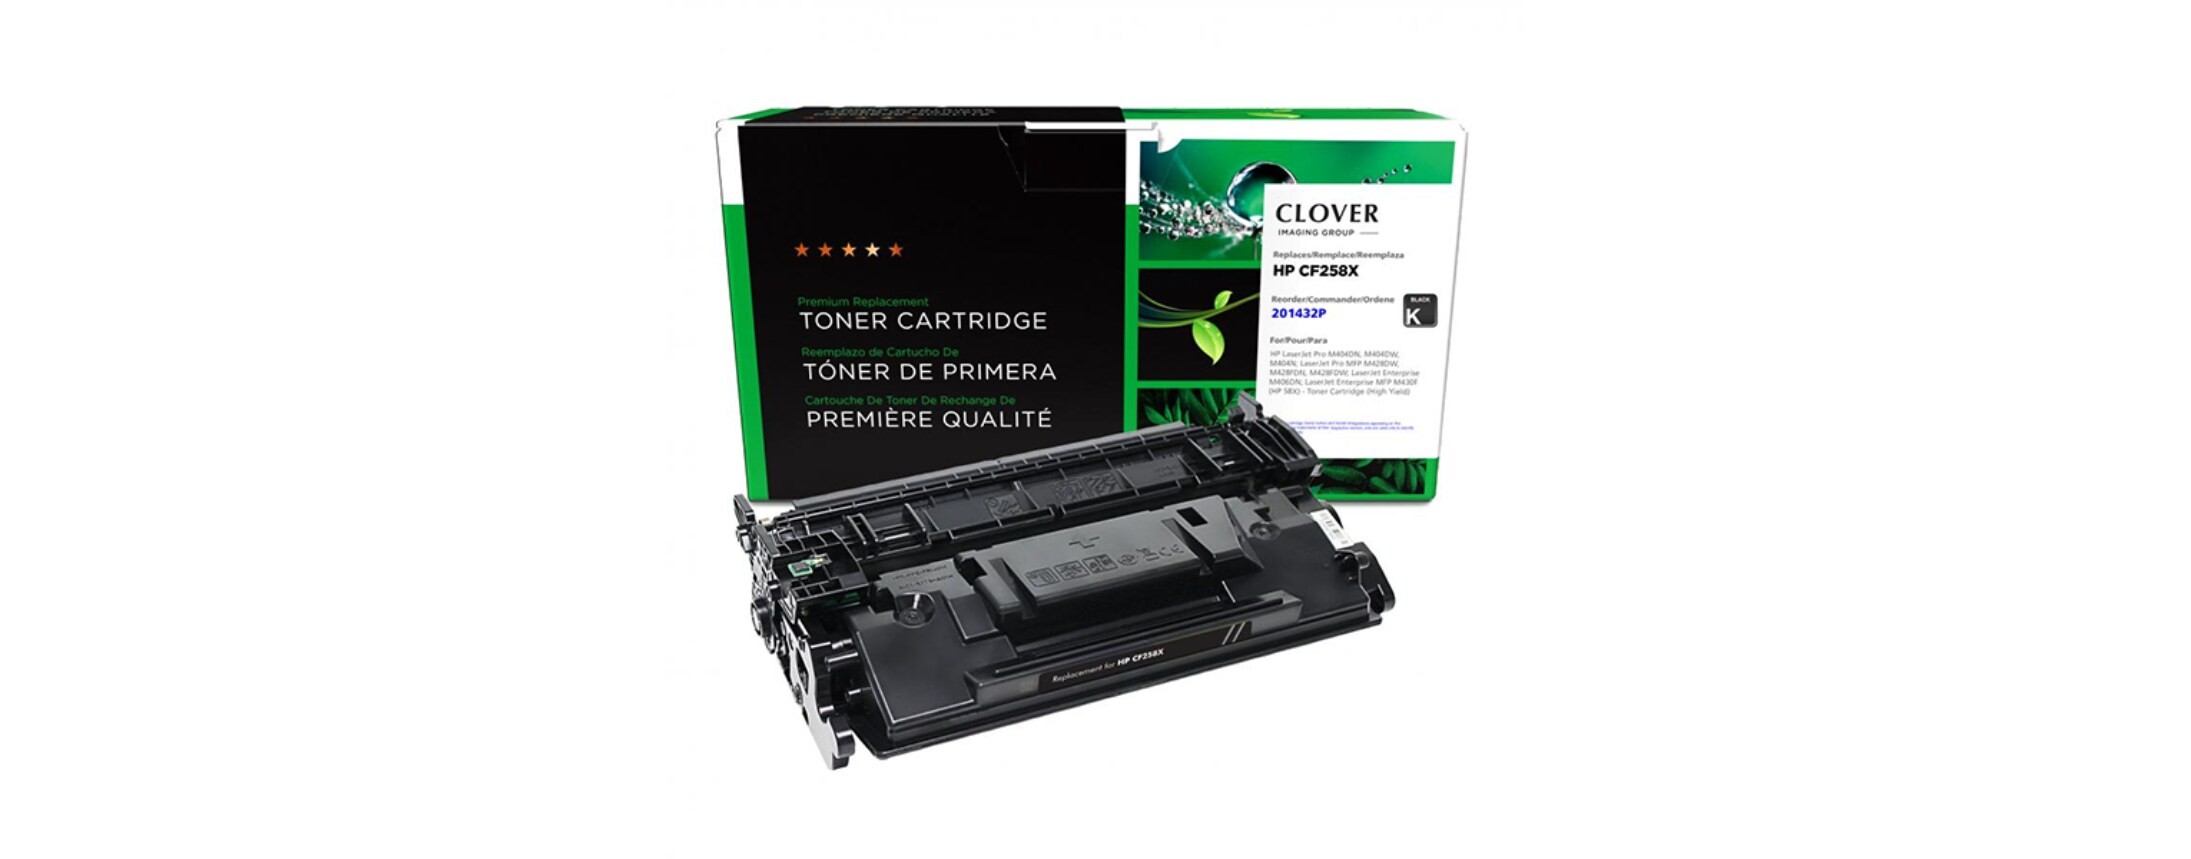 Clover Technologies High Yield Black Toner Cartridge For Hp CF258X 201432P